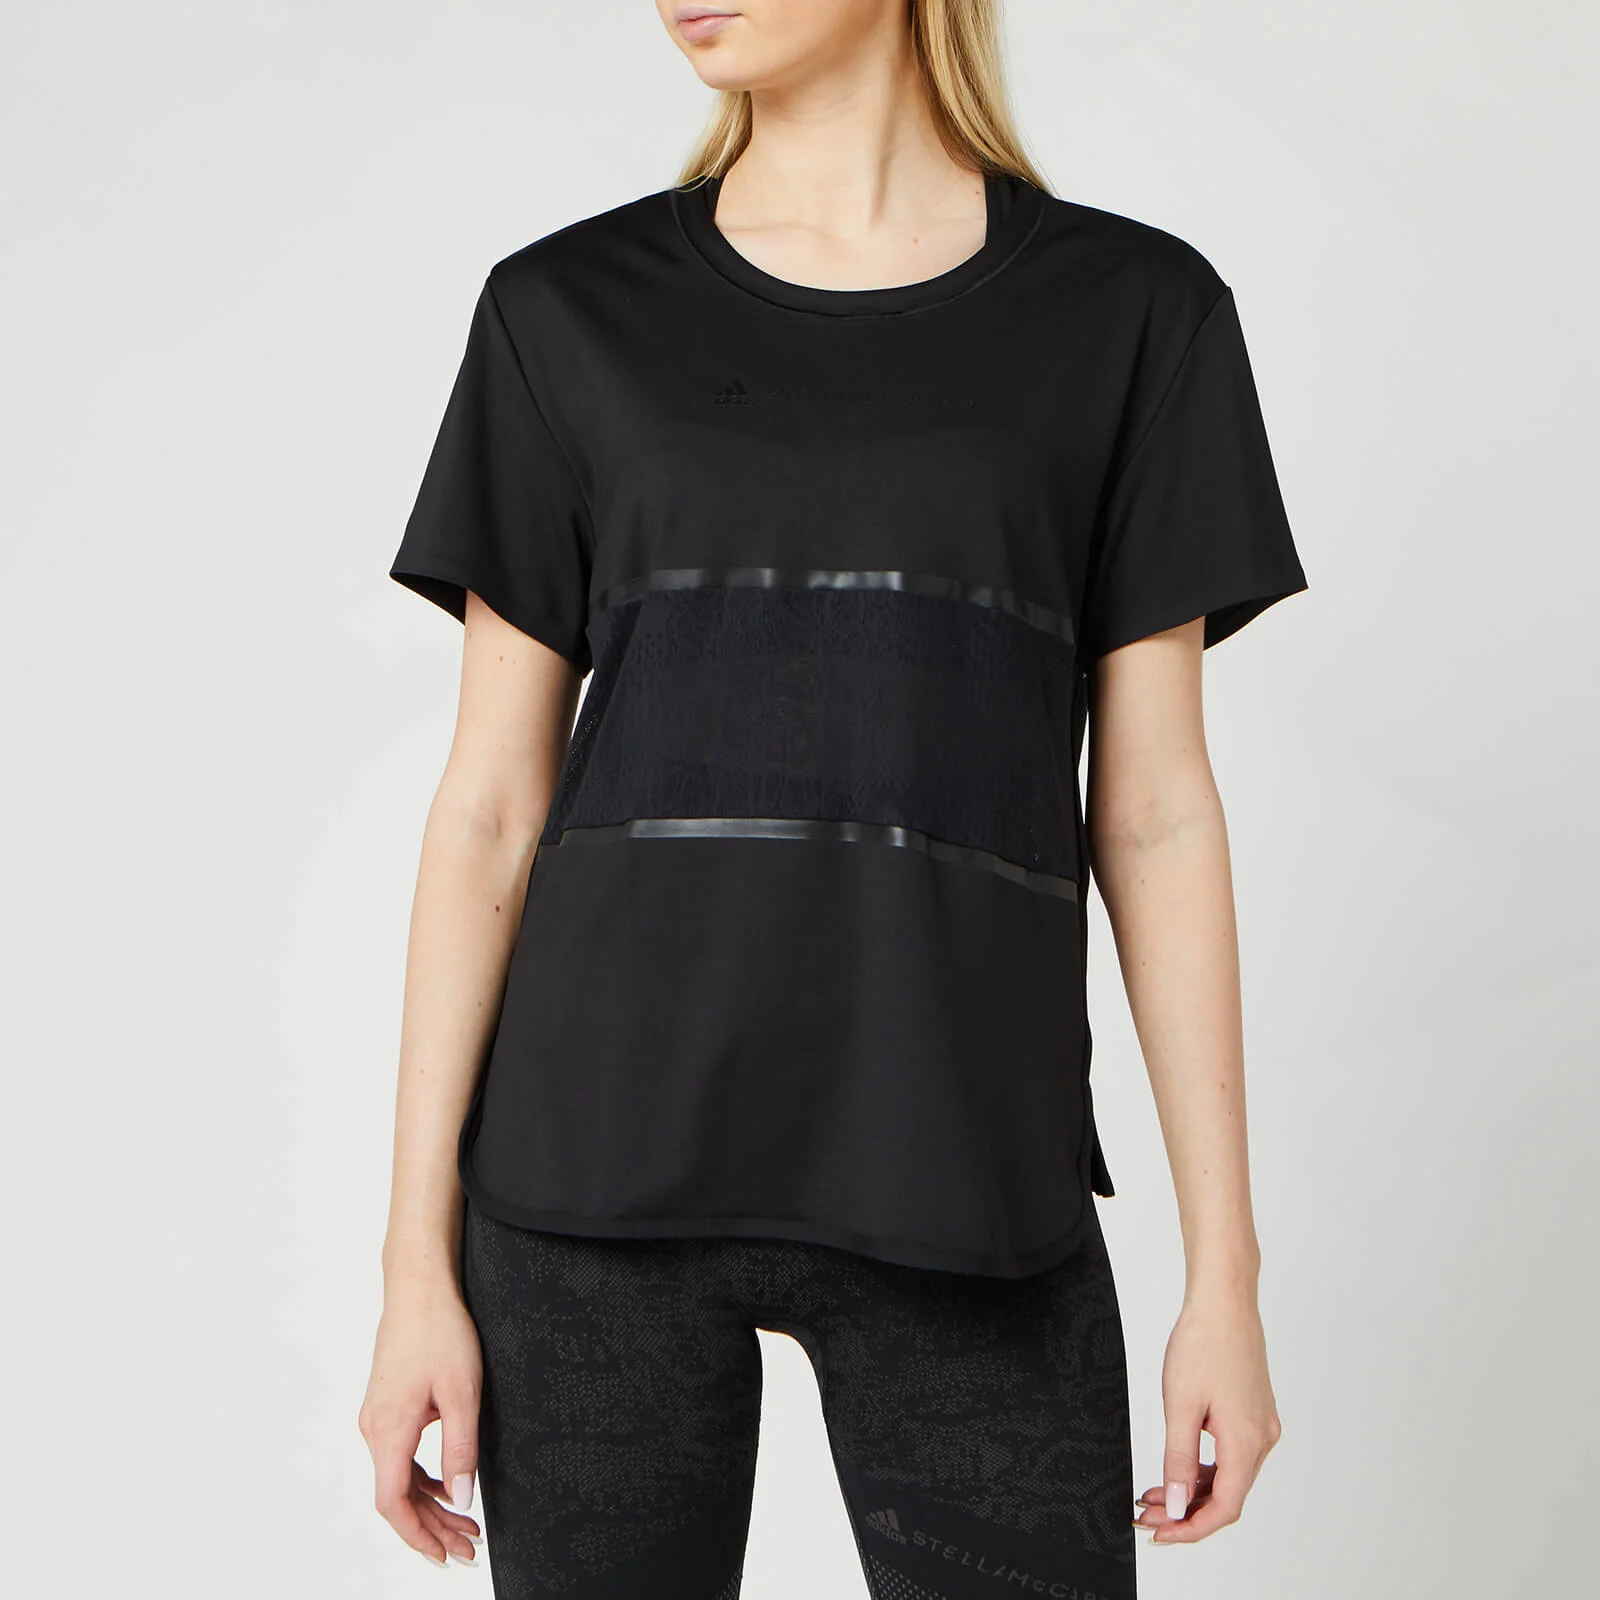 adidas by Stella McCartney Women's Loose T-Shirt - Black Image 1